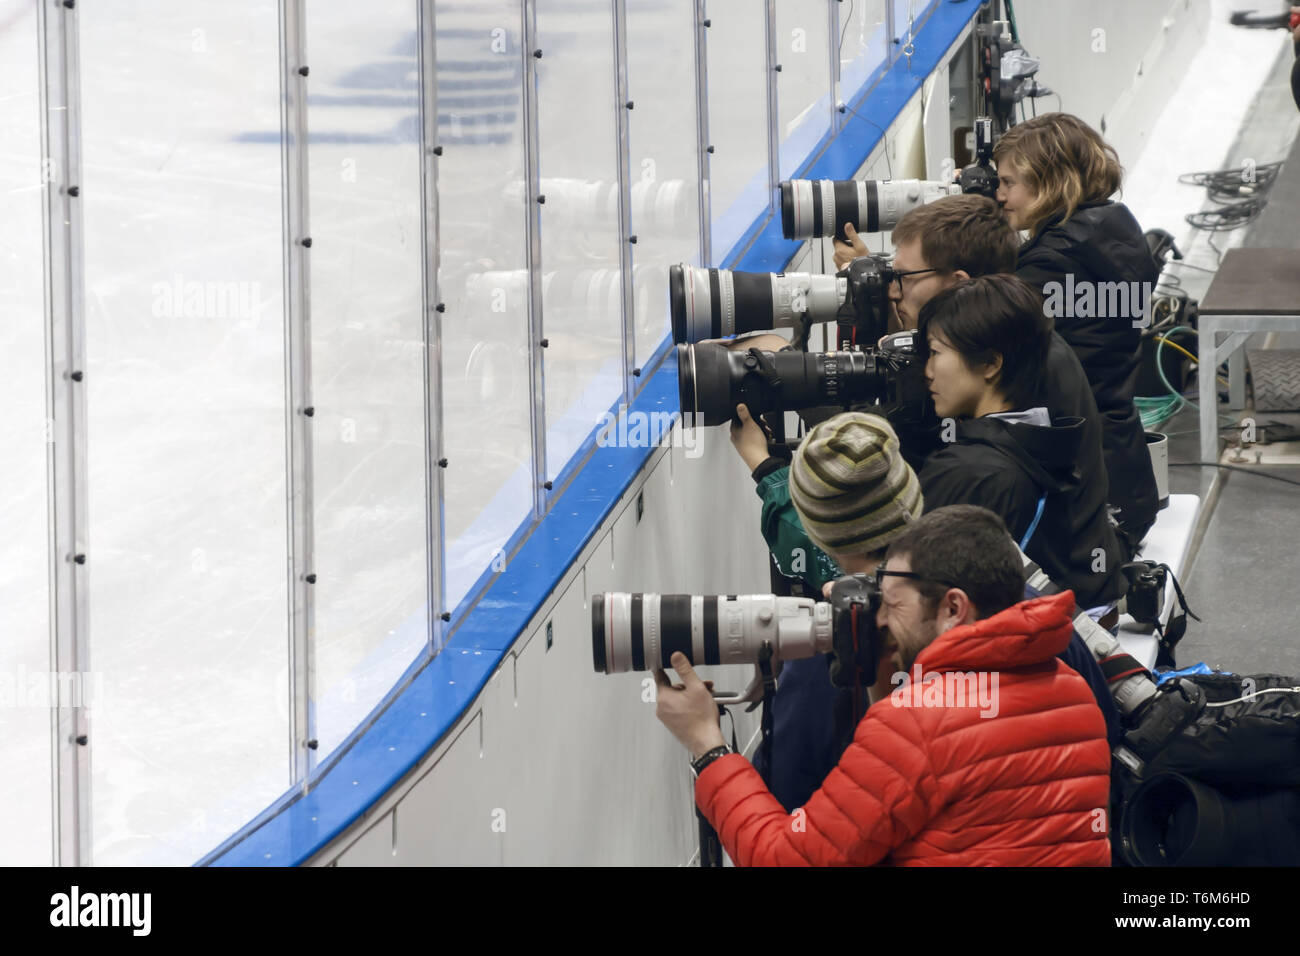 Sochi - Adler, Olympic Park, Krasnodar Region / Russian Federation - March 12, 2014. Sports Photo Essay. Stock Photo